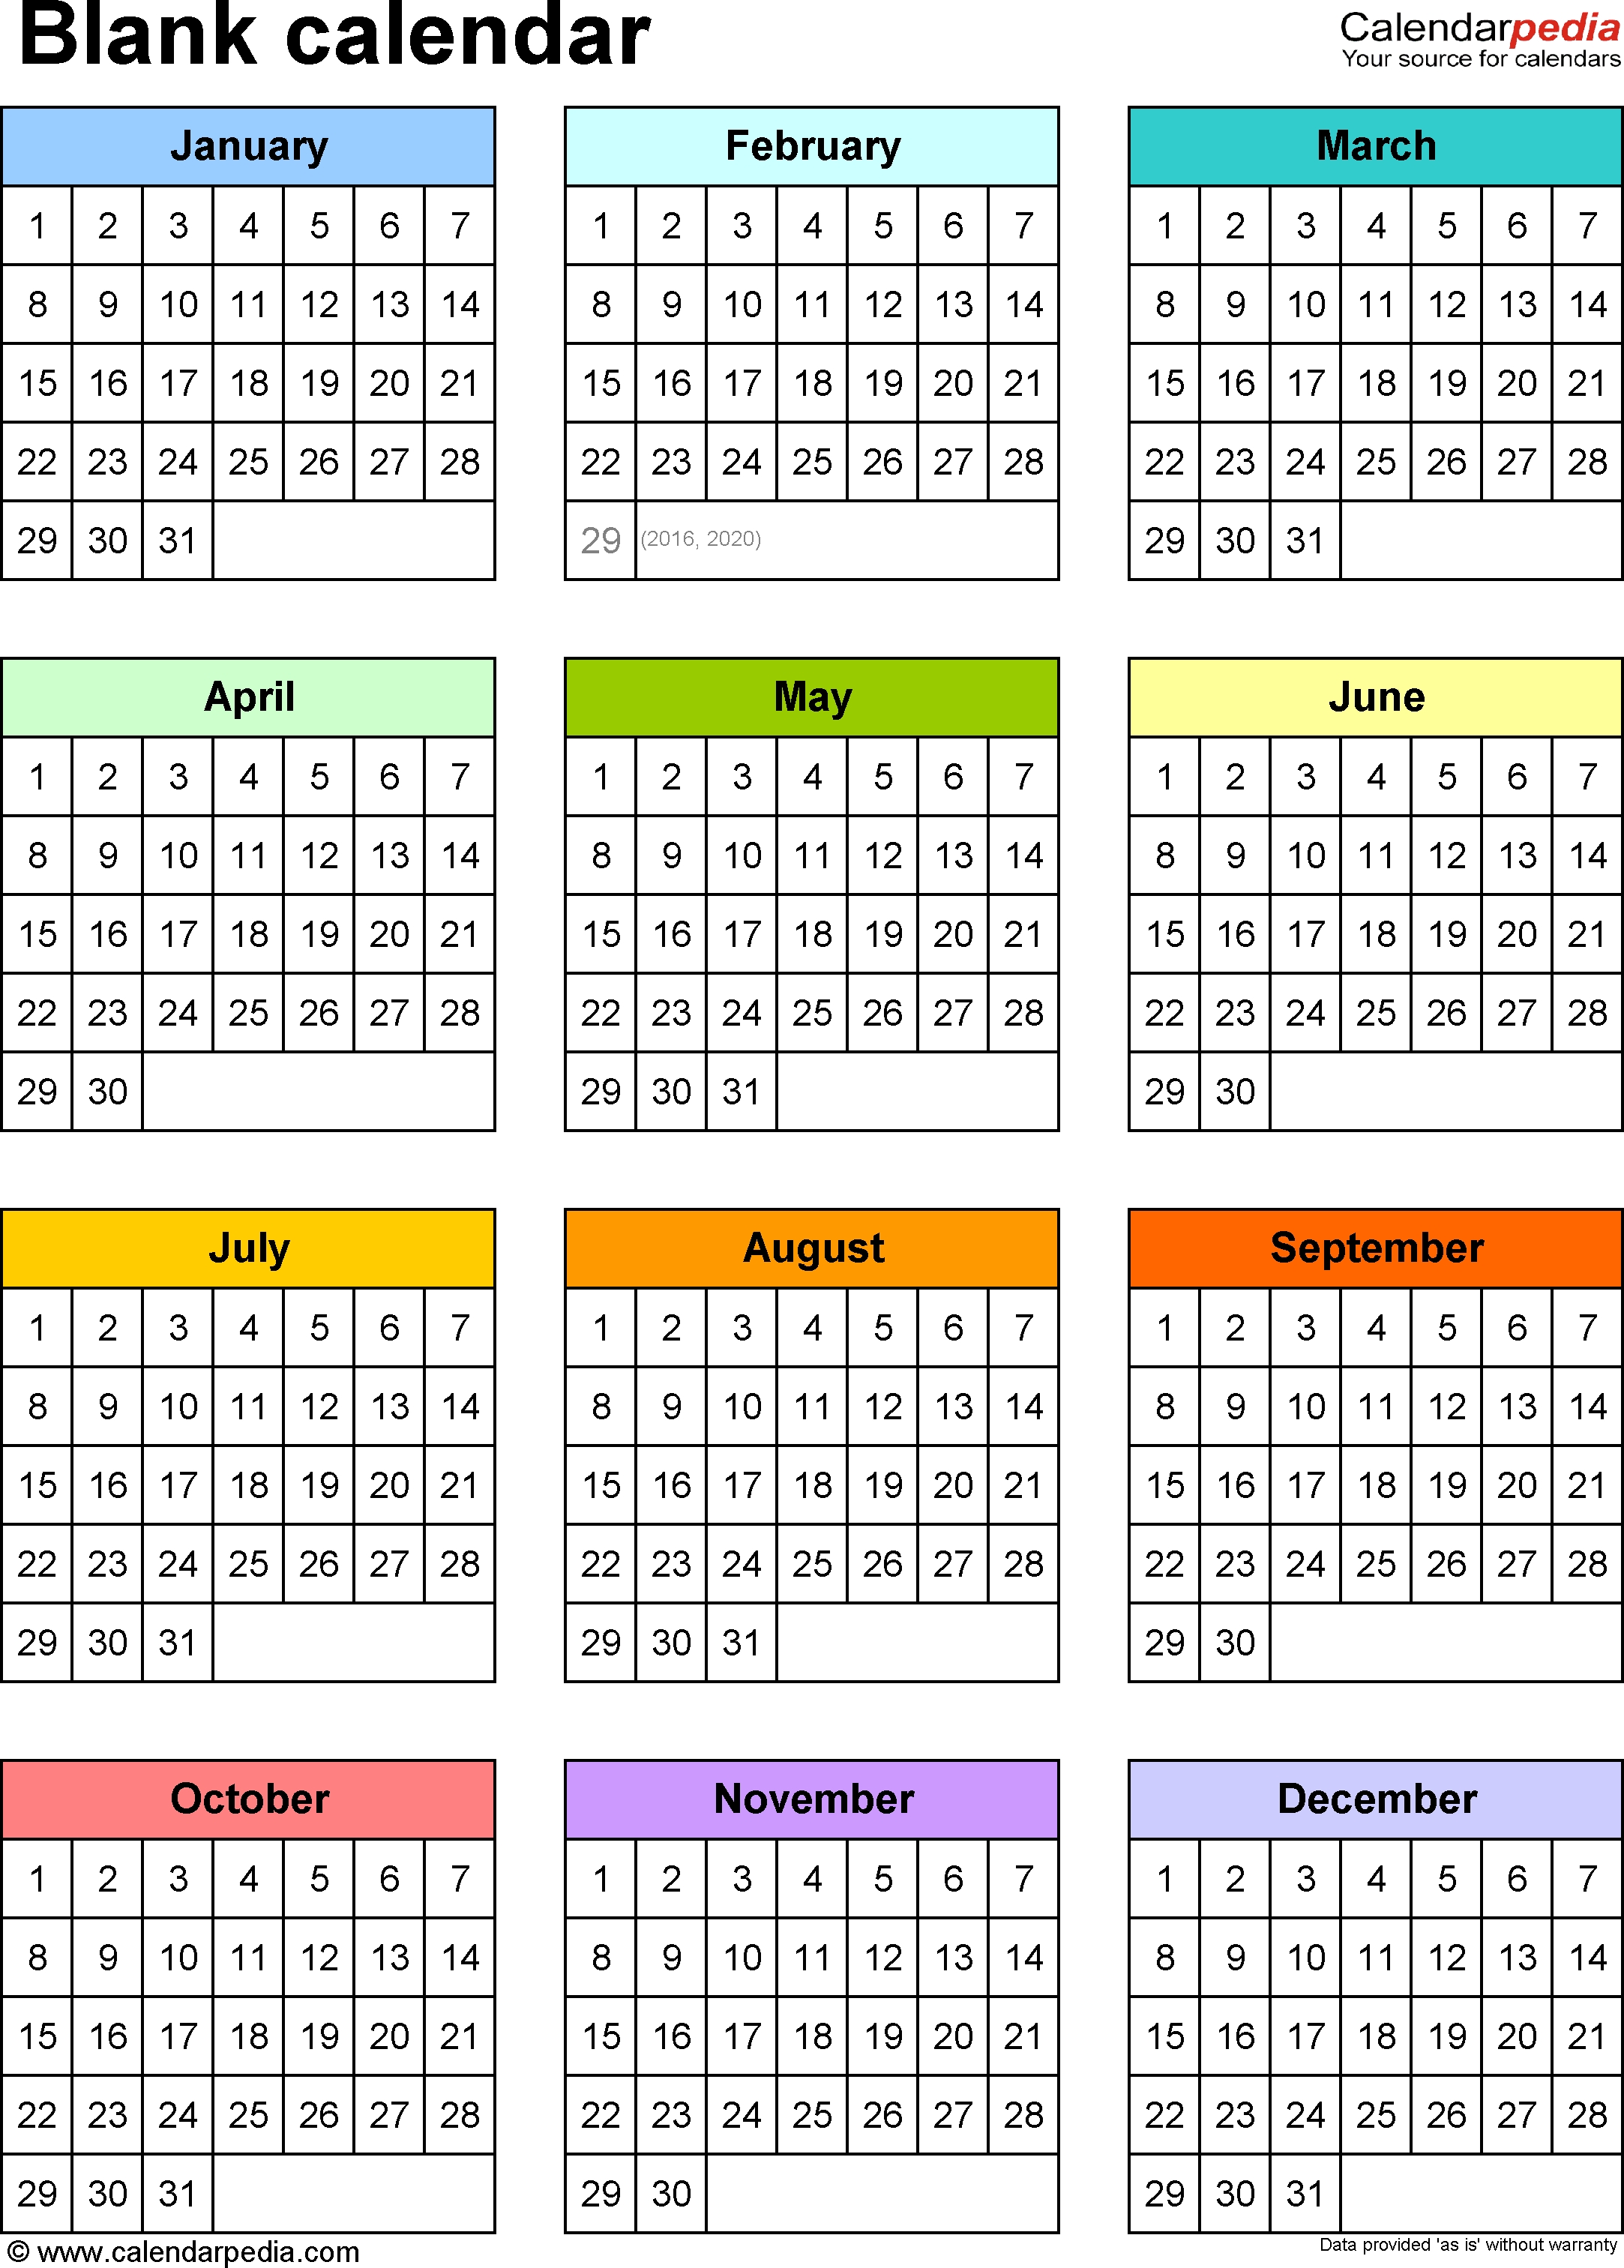 Blank Calendar - 9 Free Printable Microsoft Word Templates  1 Page 9 Month Calendar